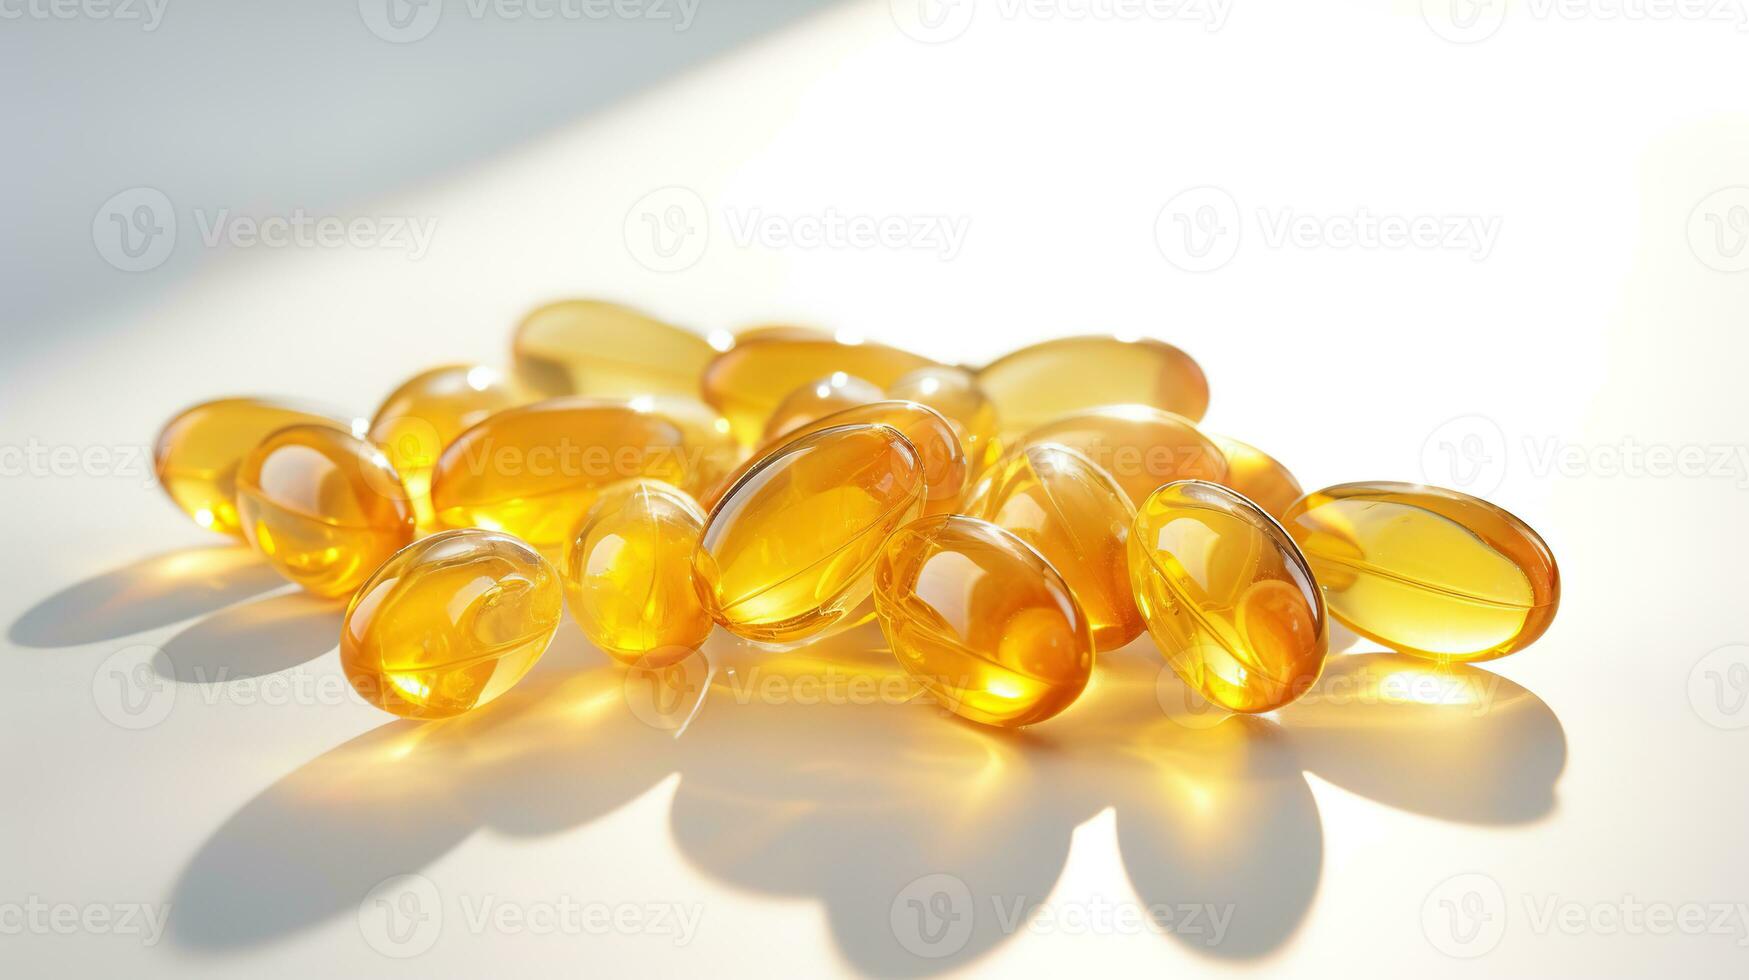 transparant geel vitamines Aan een licht achtergrond. vitamine d, omega 3, omega 6, voedsel supplement olie gevulde vis olie, vitamine a, vitamine e, lijnzaad olie. foto